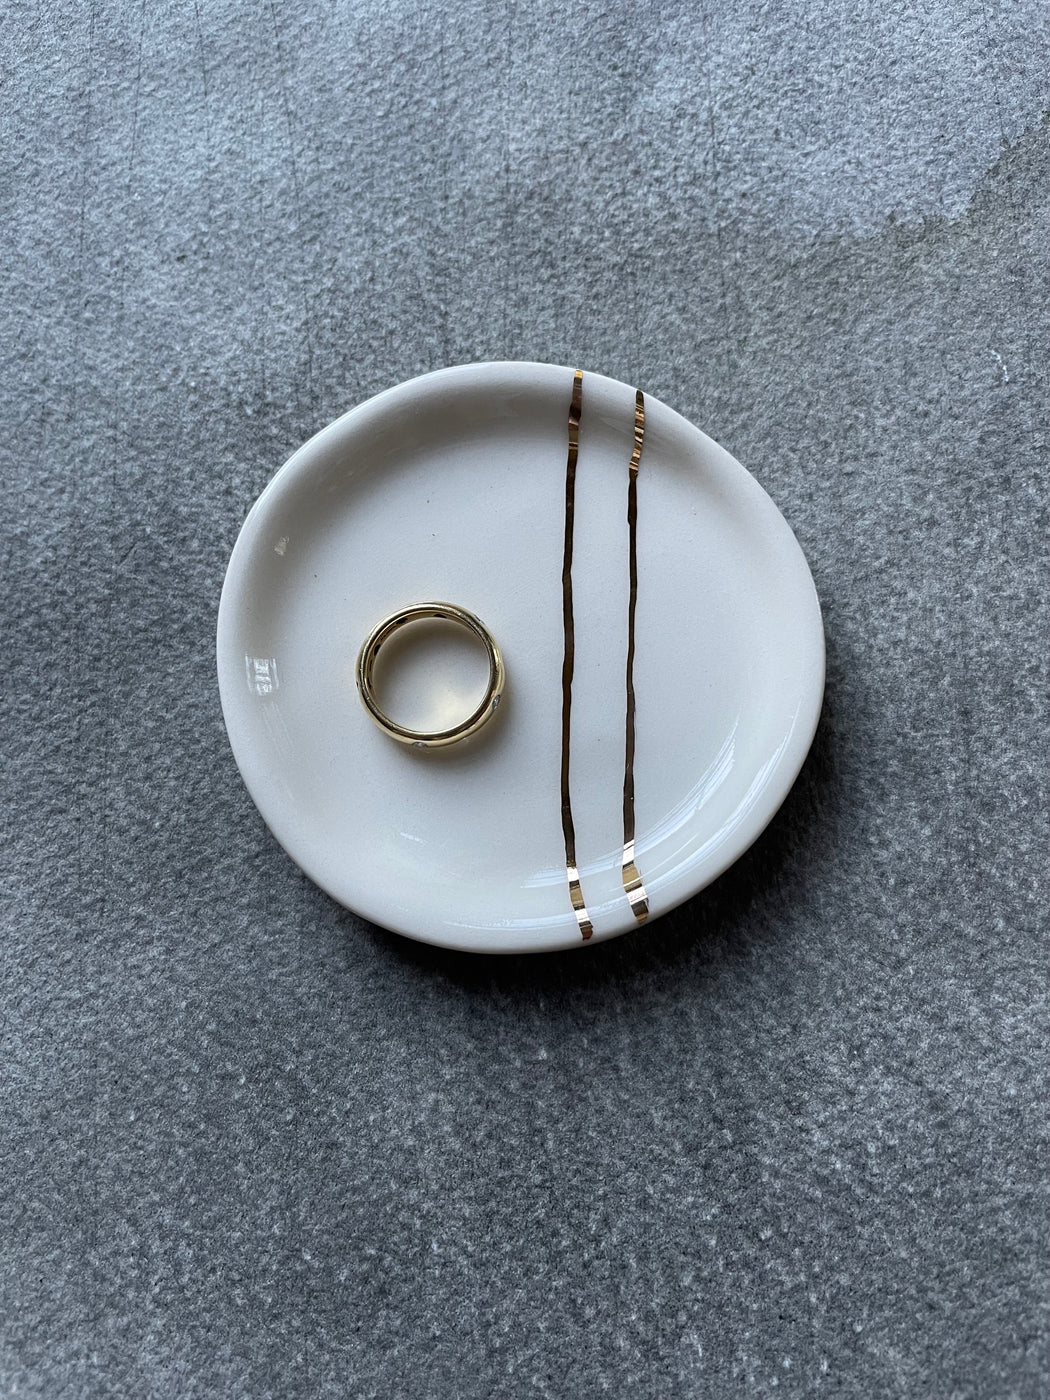 "Minimalist" Ring Dish by Honeycomb Studio